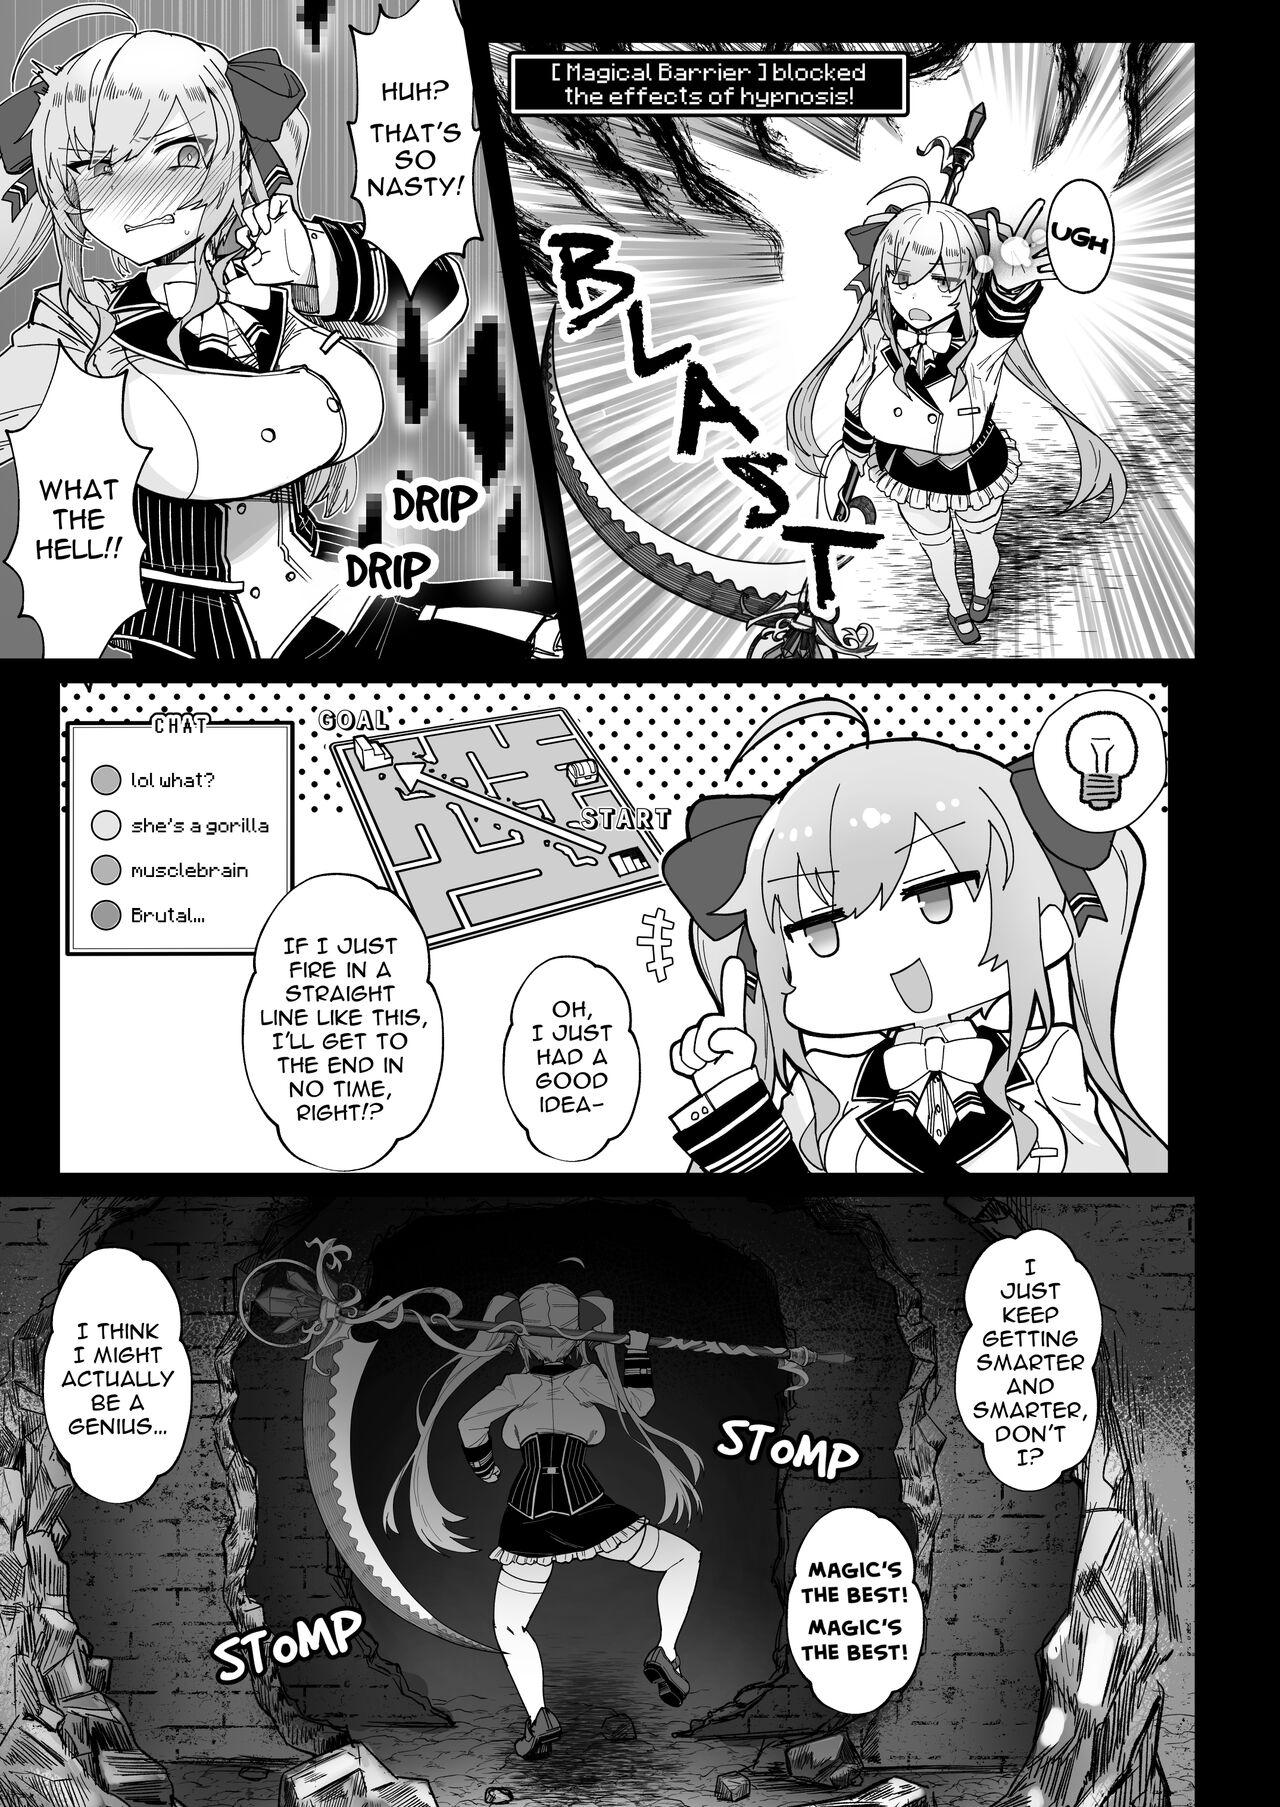 Off Niji Ero Trap Dungeon Bu 2 - Nijisanji Ero trap dungeon Gostosas - Page 6